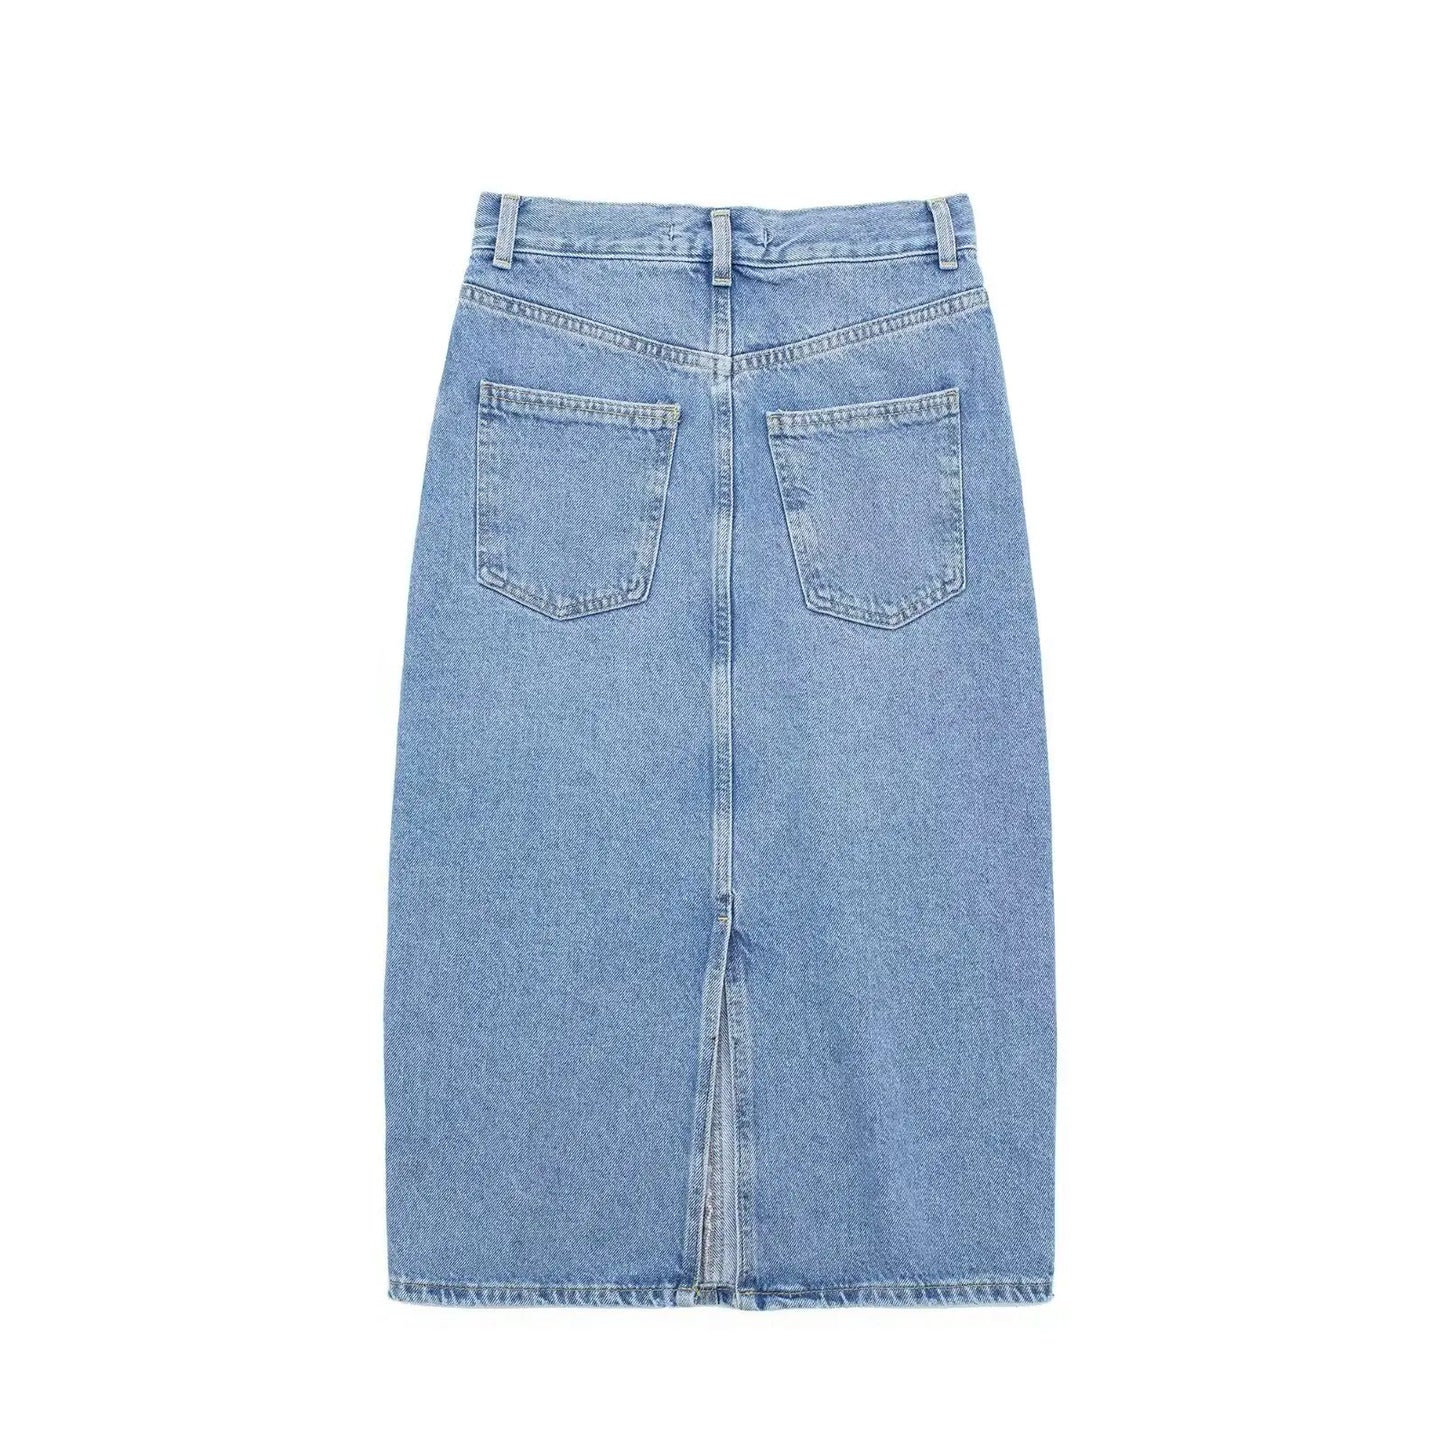 Denim  Blue Pencil Jeans Skirt